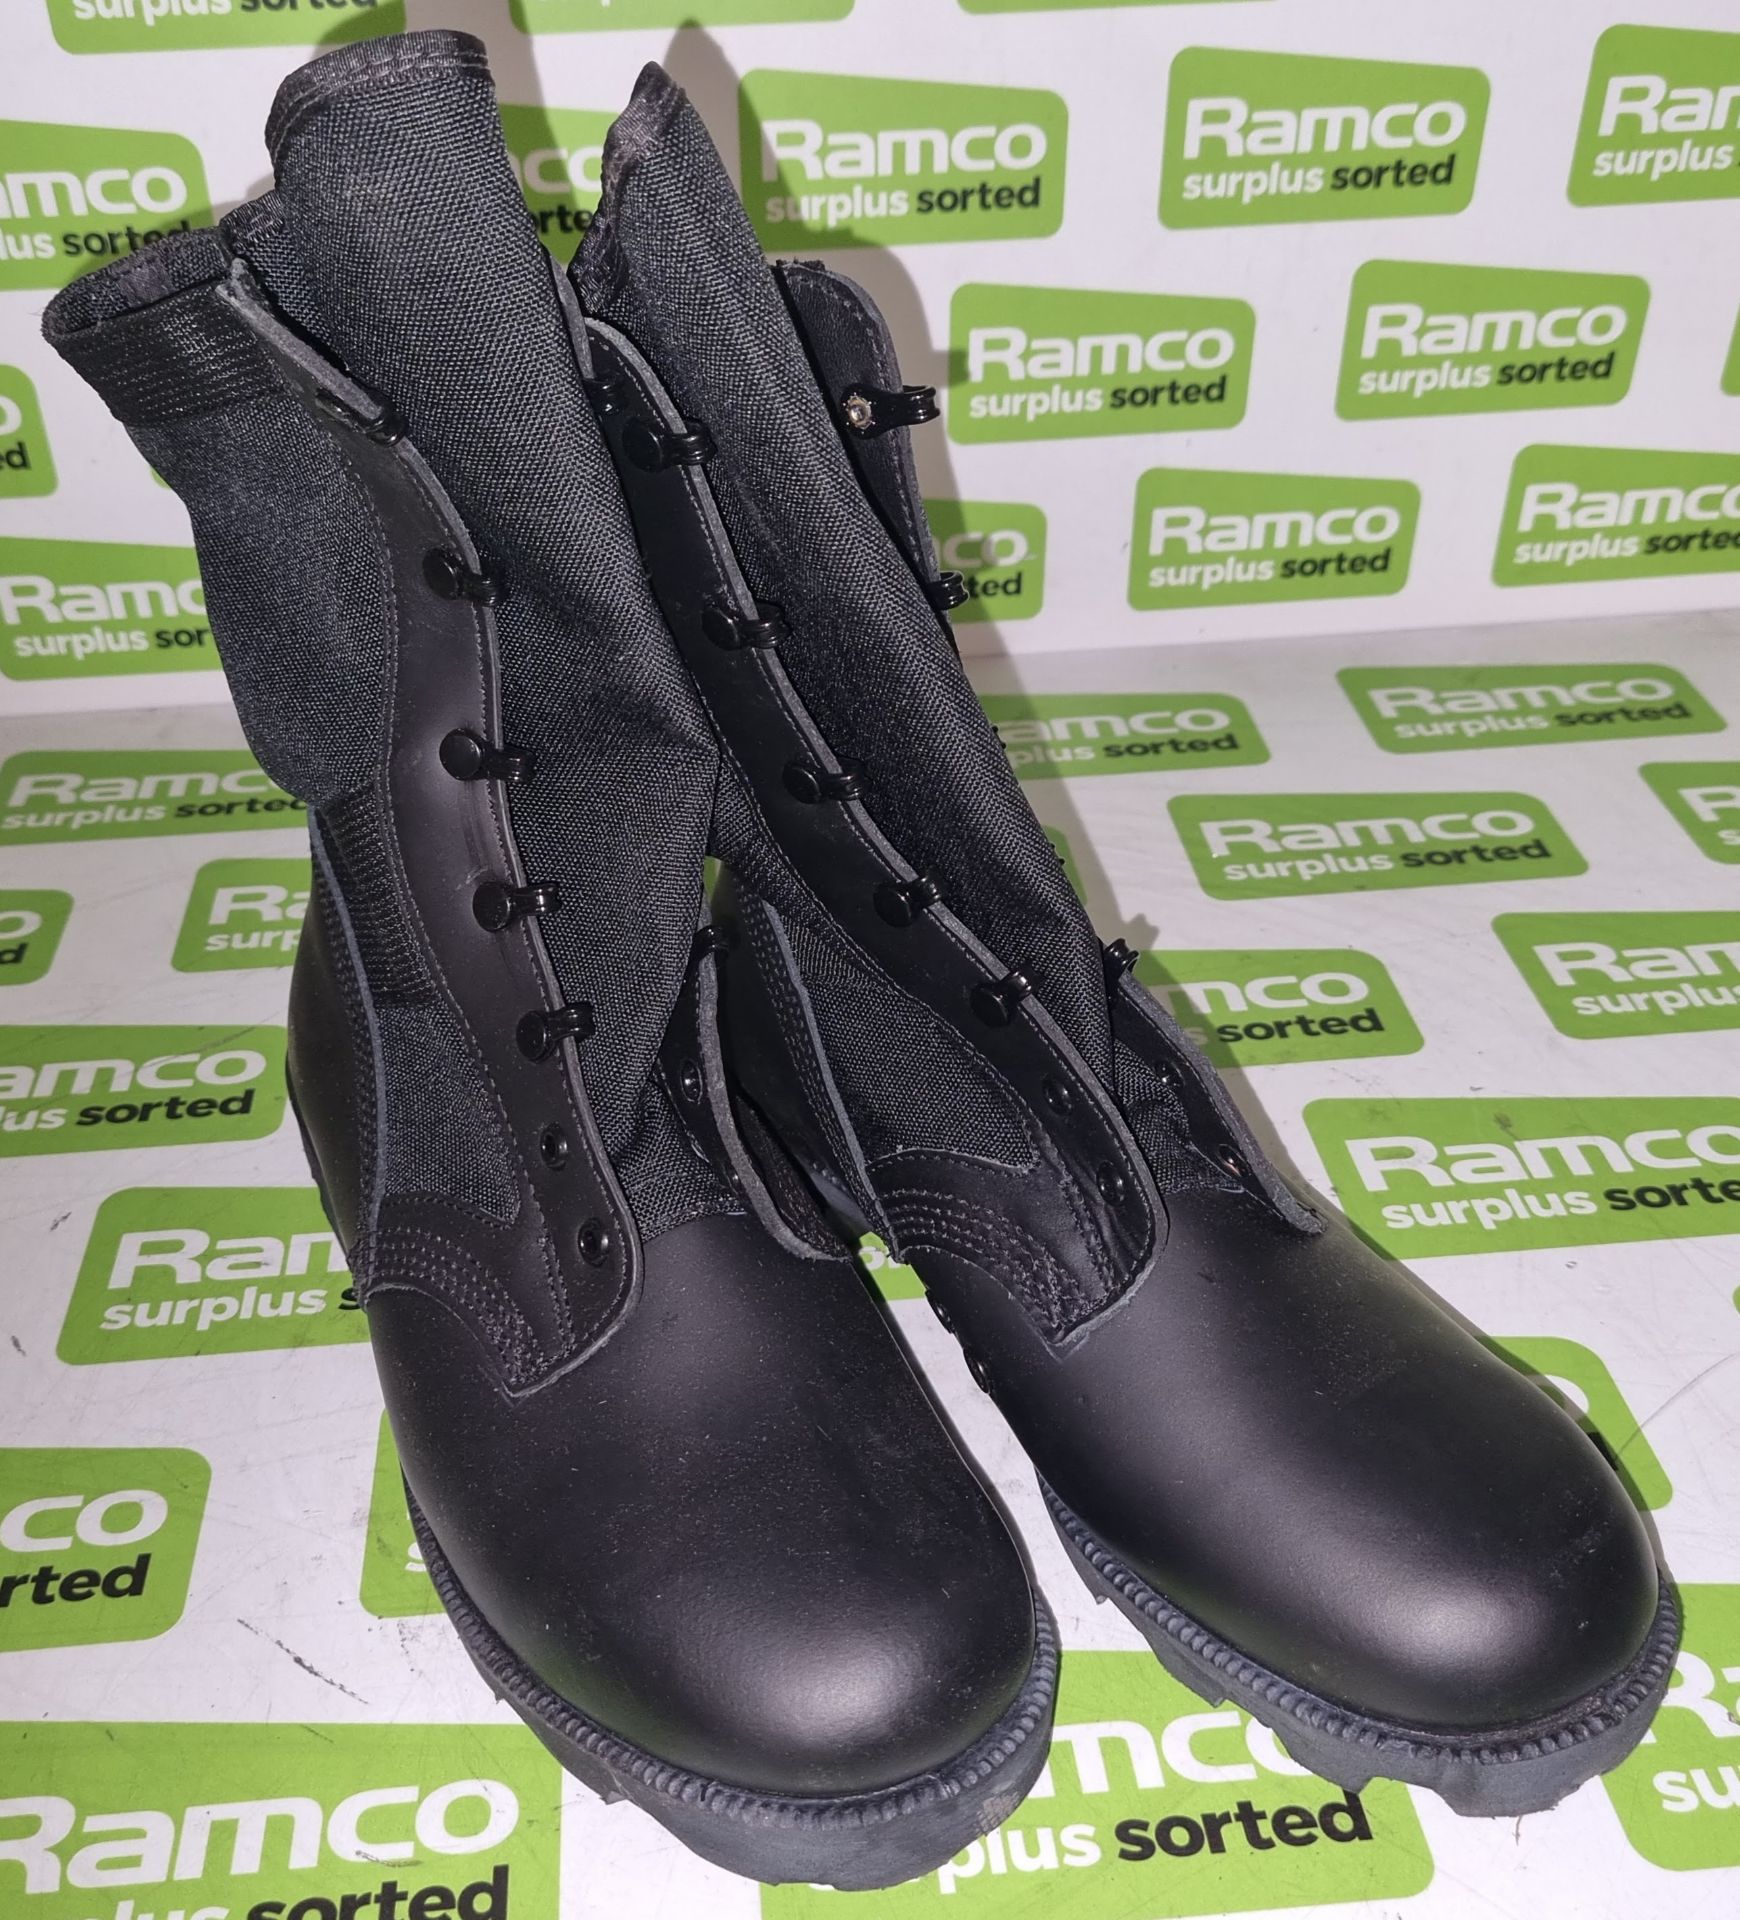 Wellco Peruana Boots - Black - size 8